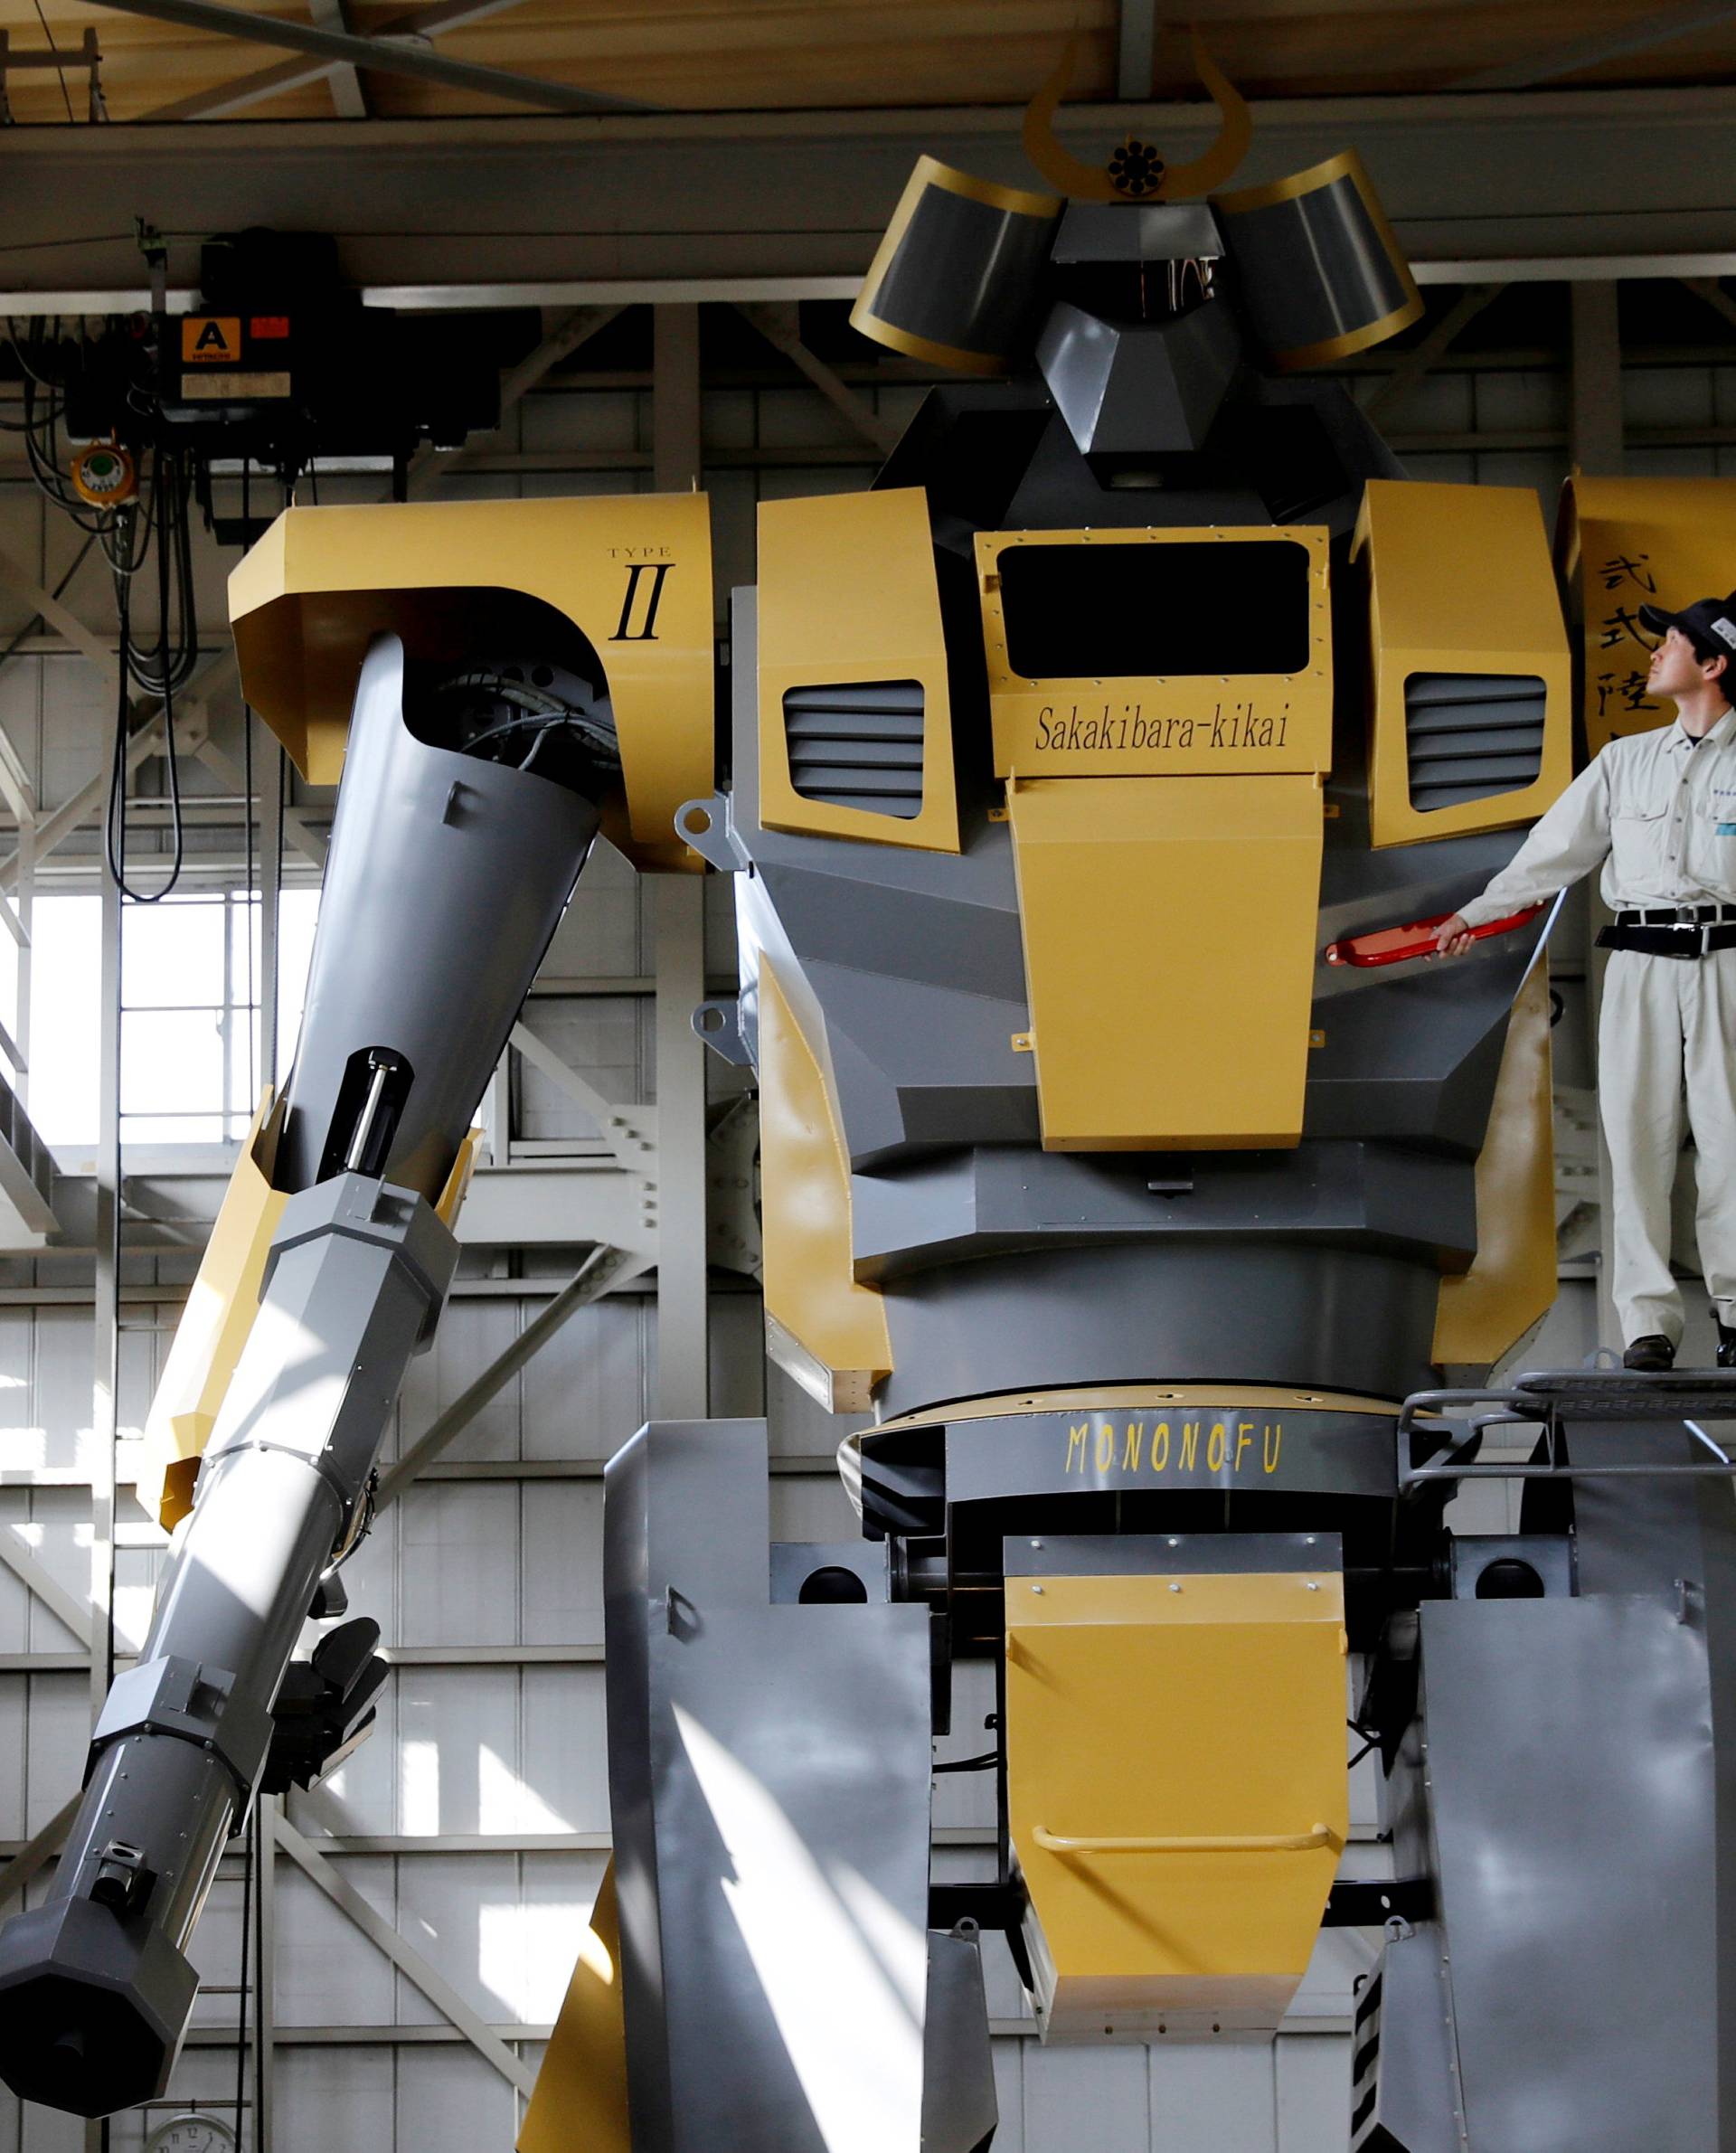 Sakakibara Kikai's engineer Go Sakakibara poses with the bipedal robot Mononofu during its demonstration at its factory in Shinto Village